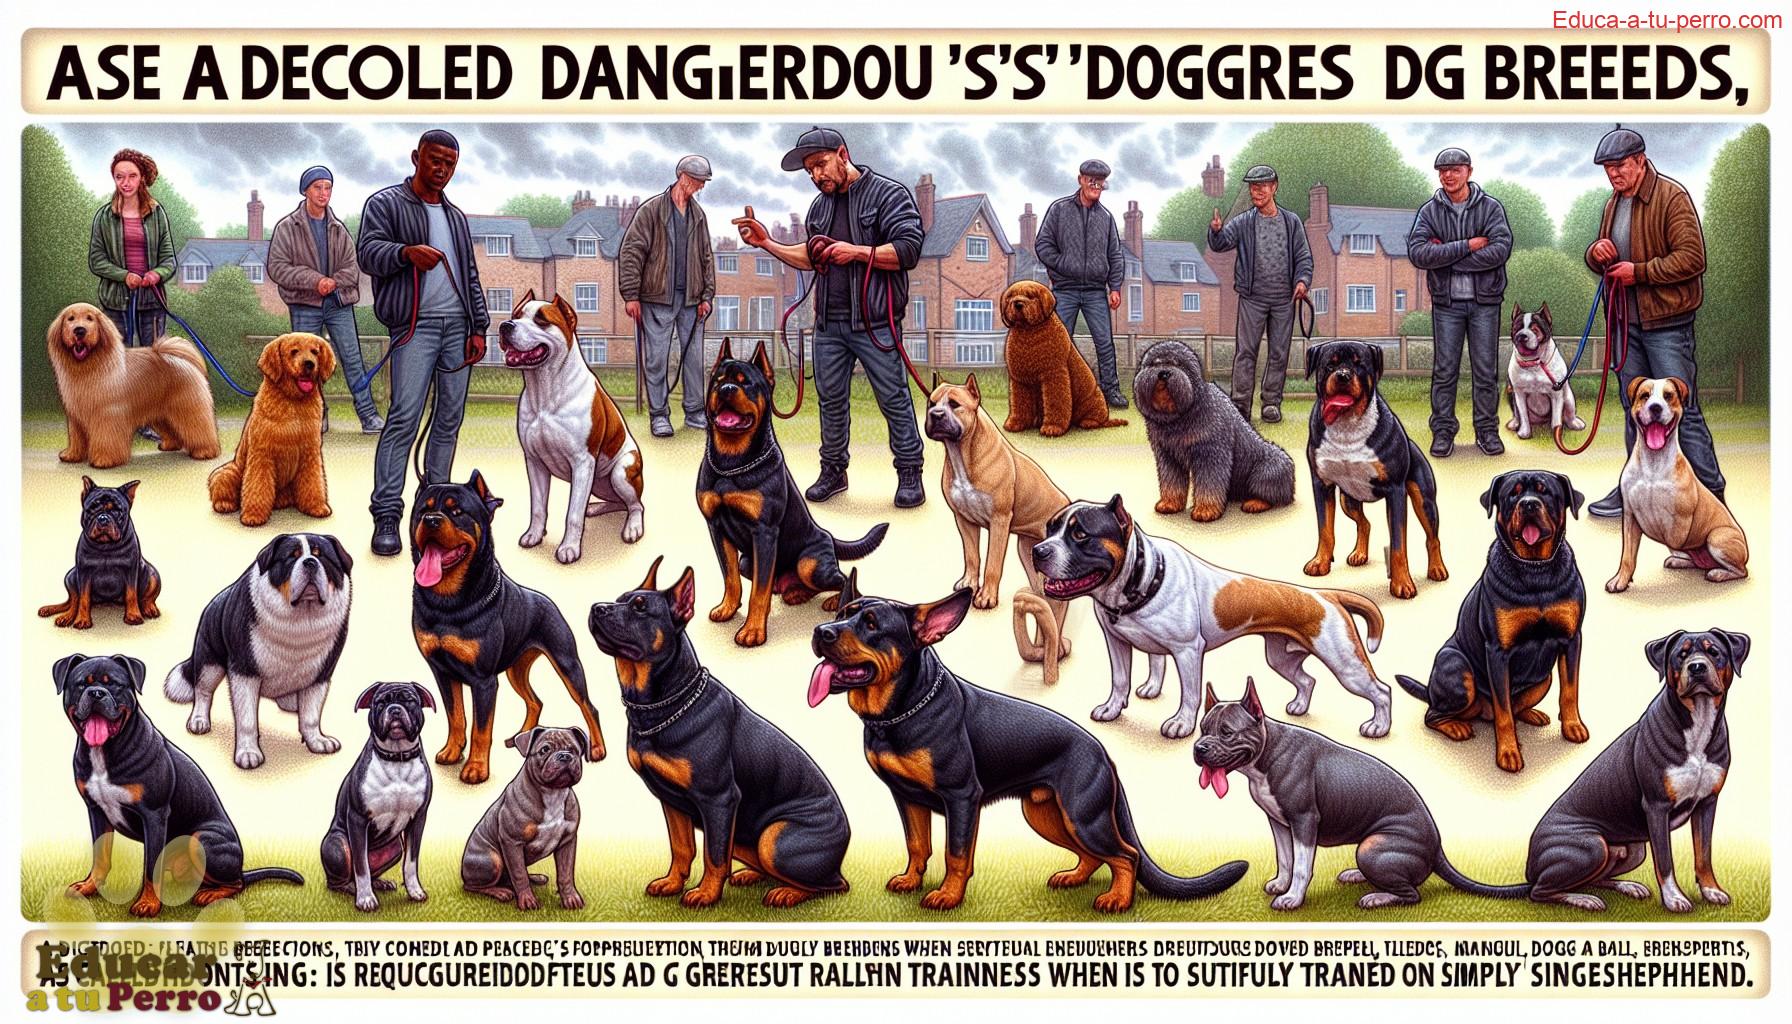 razas de perros peligrosos - Razas de Perros peligrosos